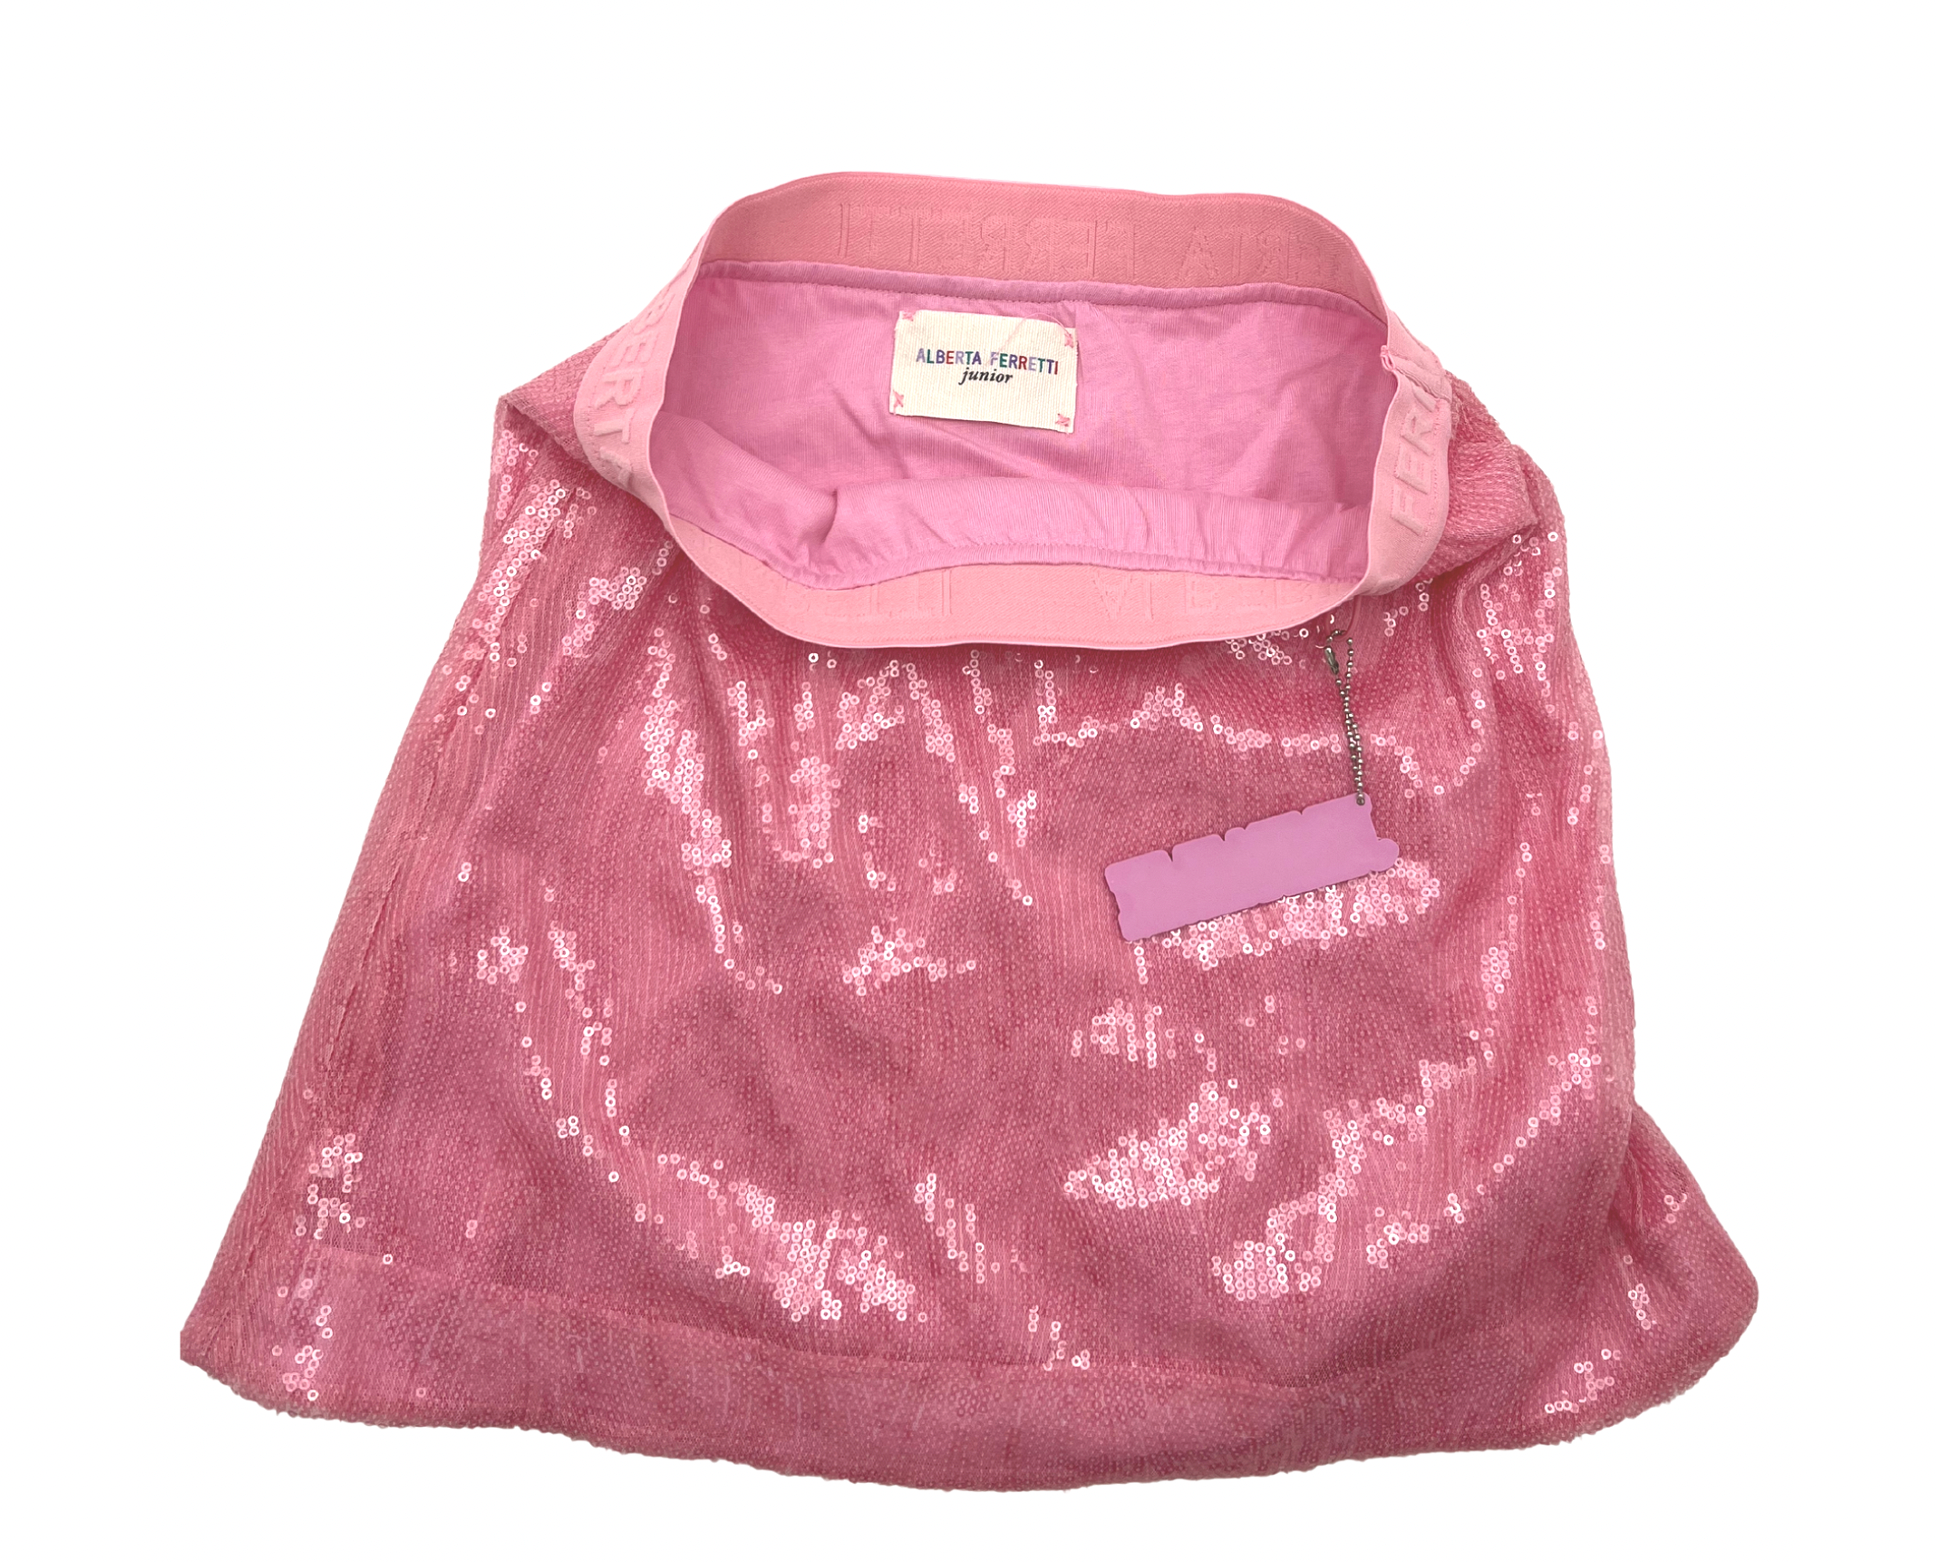 ALBERTA FERRETTI - Pink sequined skirt - 12 years old